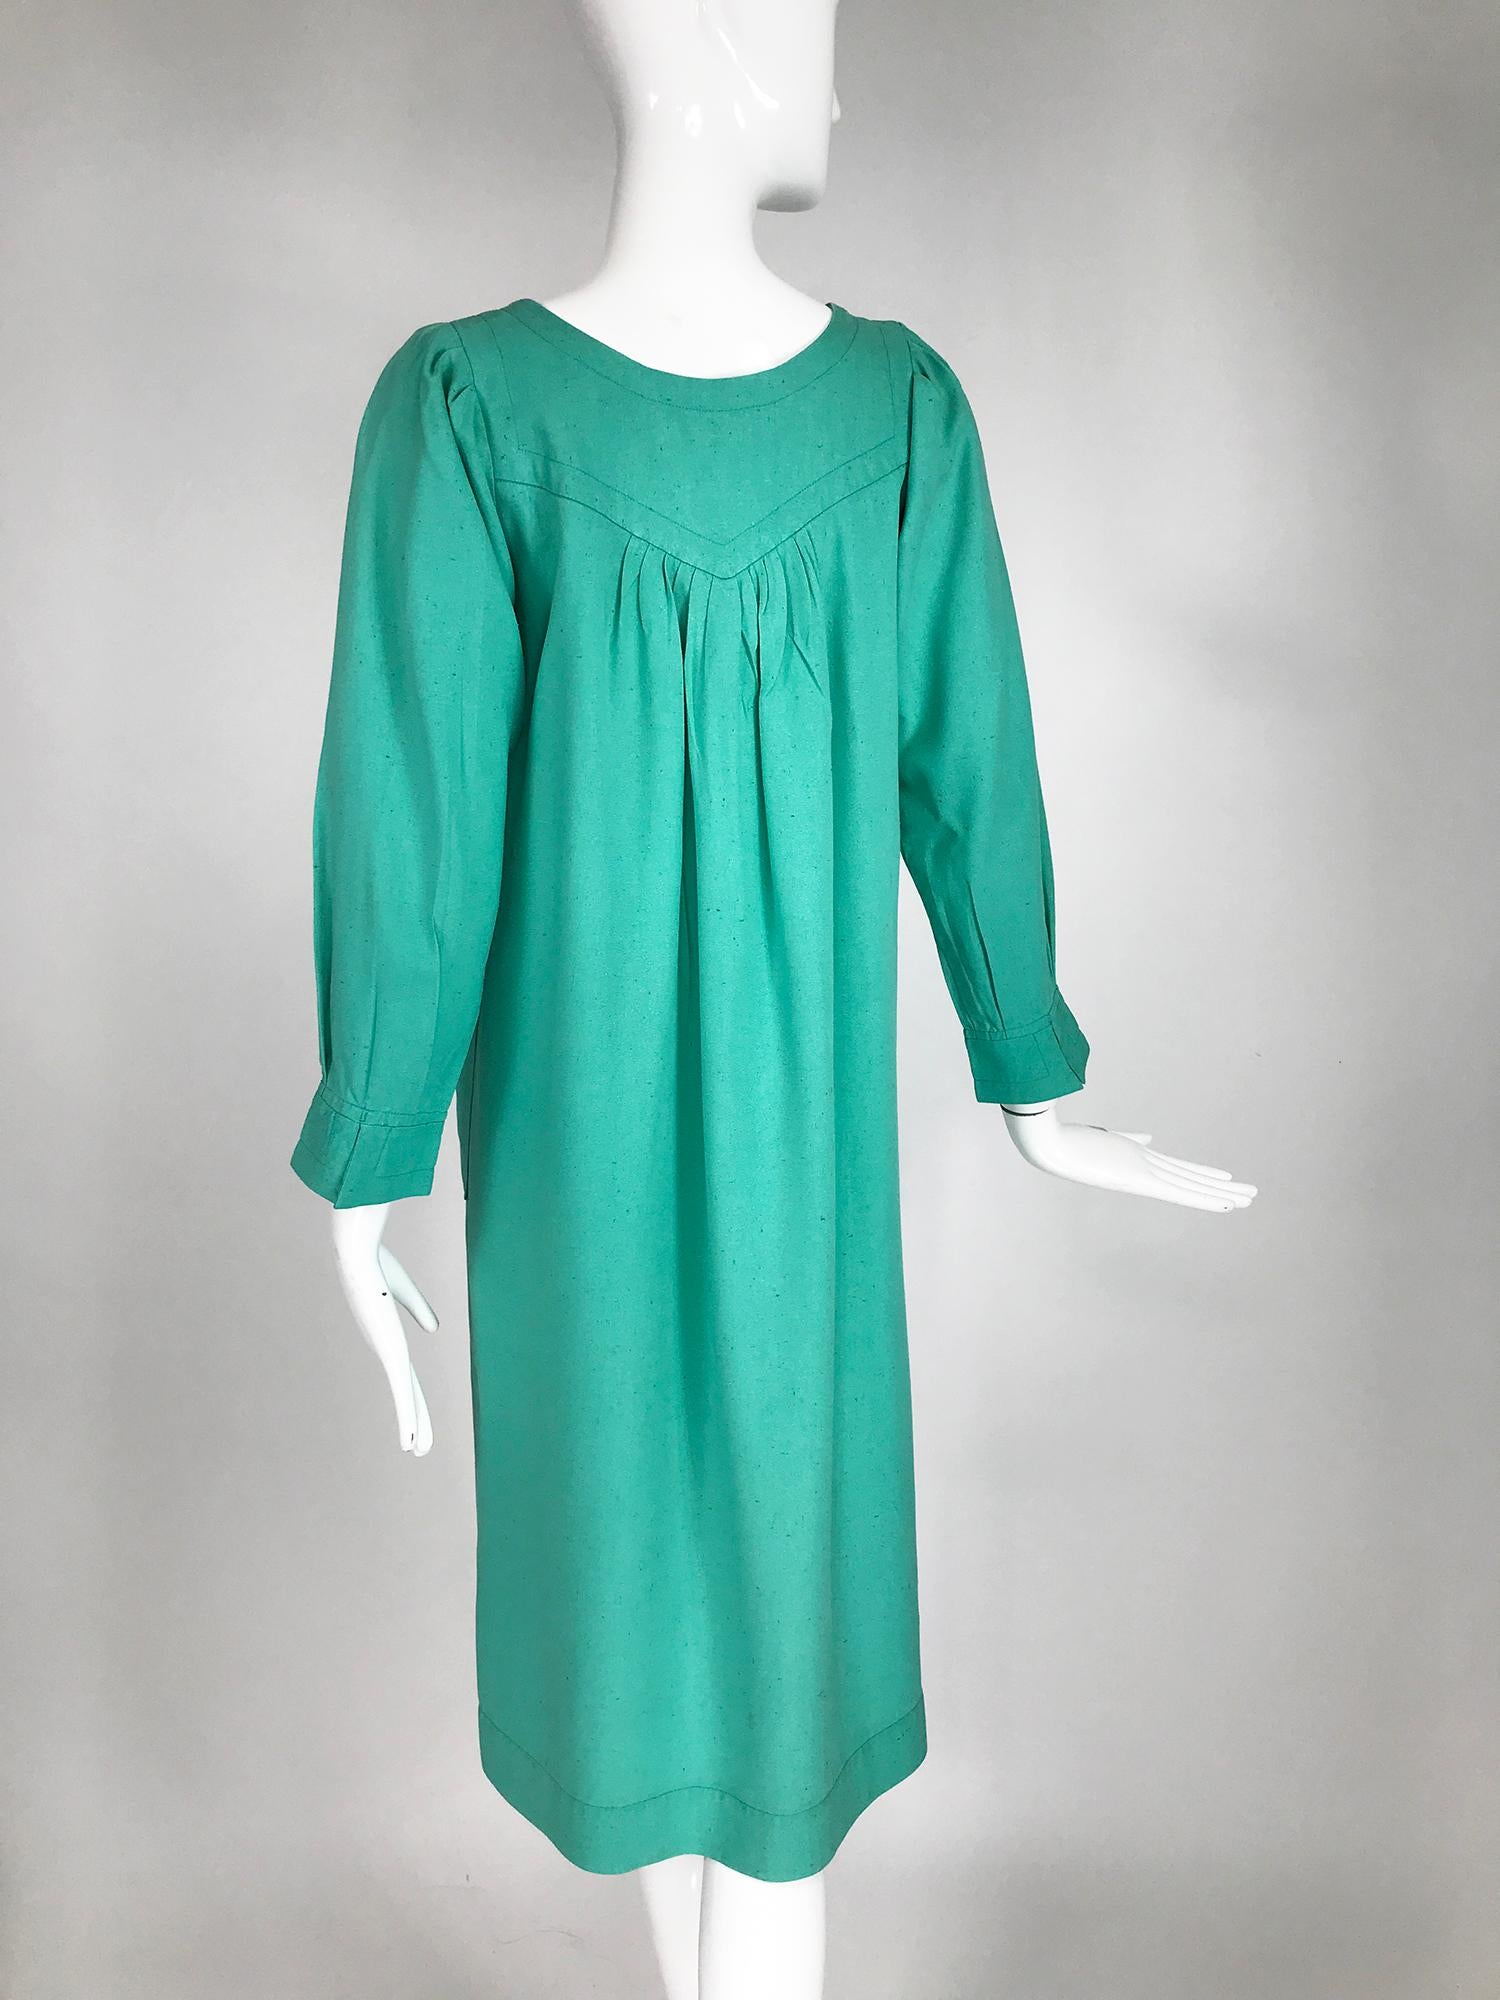 Yves Saint Laurent Rive Gauche Aqua Slub Silk Smock Dress 1970s 1